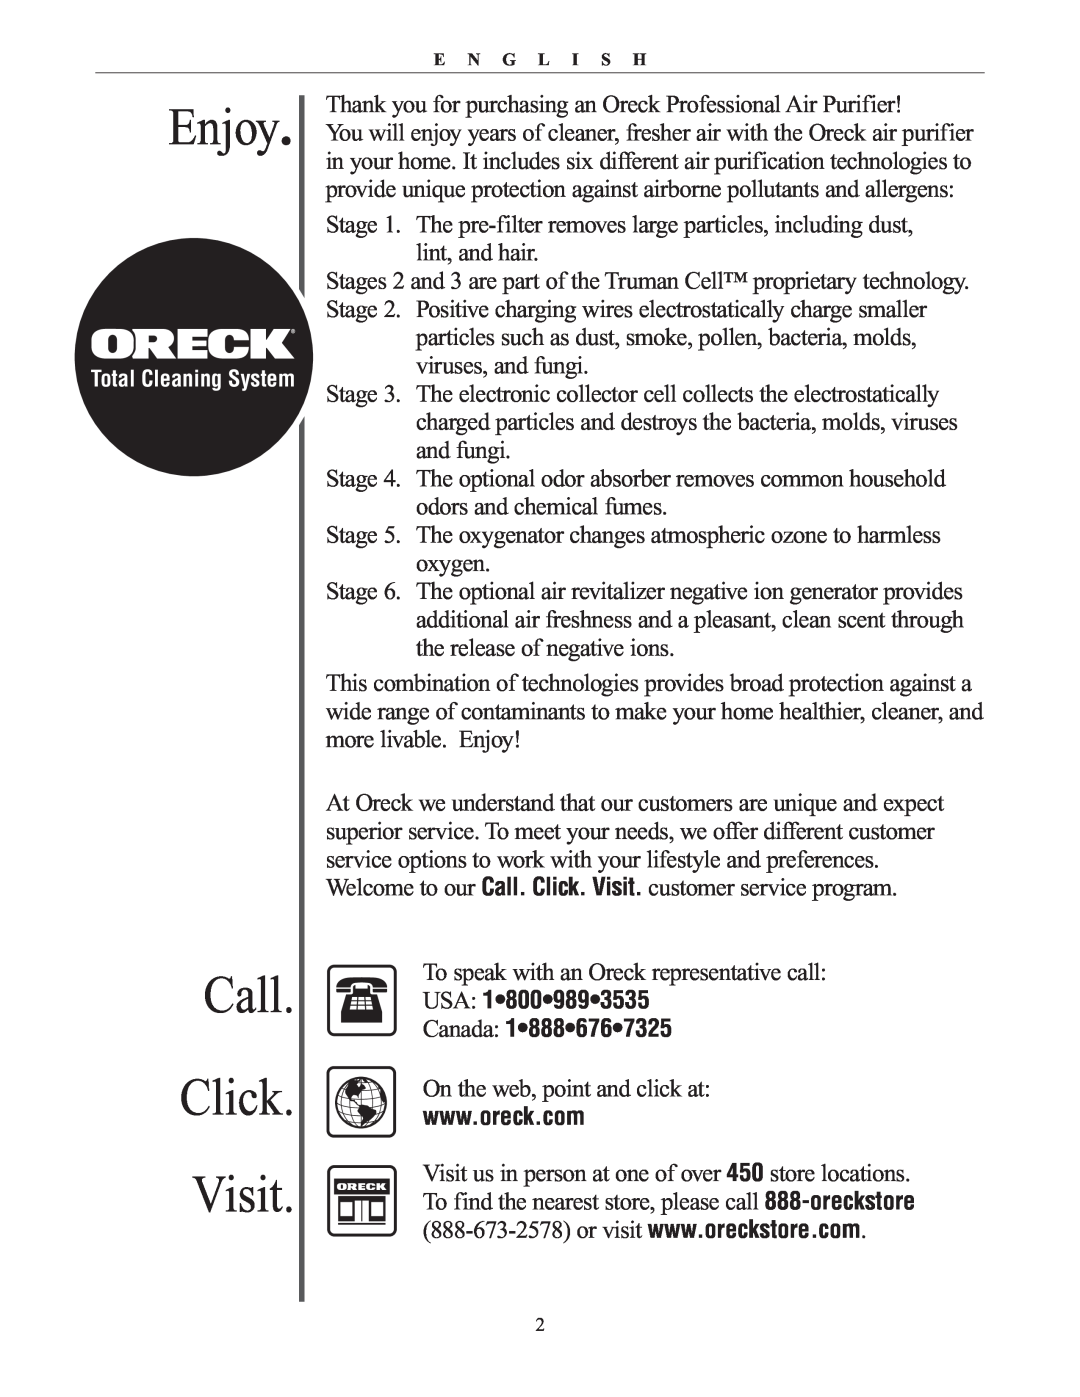 Oreck AIRP Series manual Enjoy, Call Click Visit, USA 18009893535 Canada 